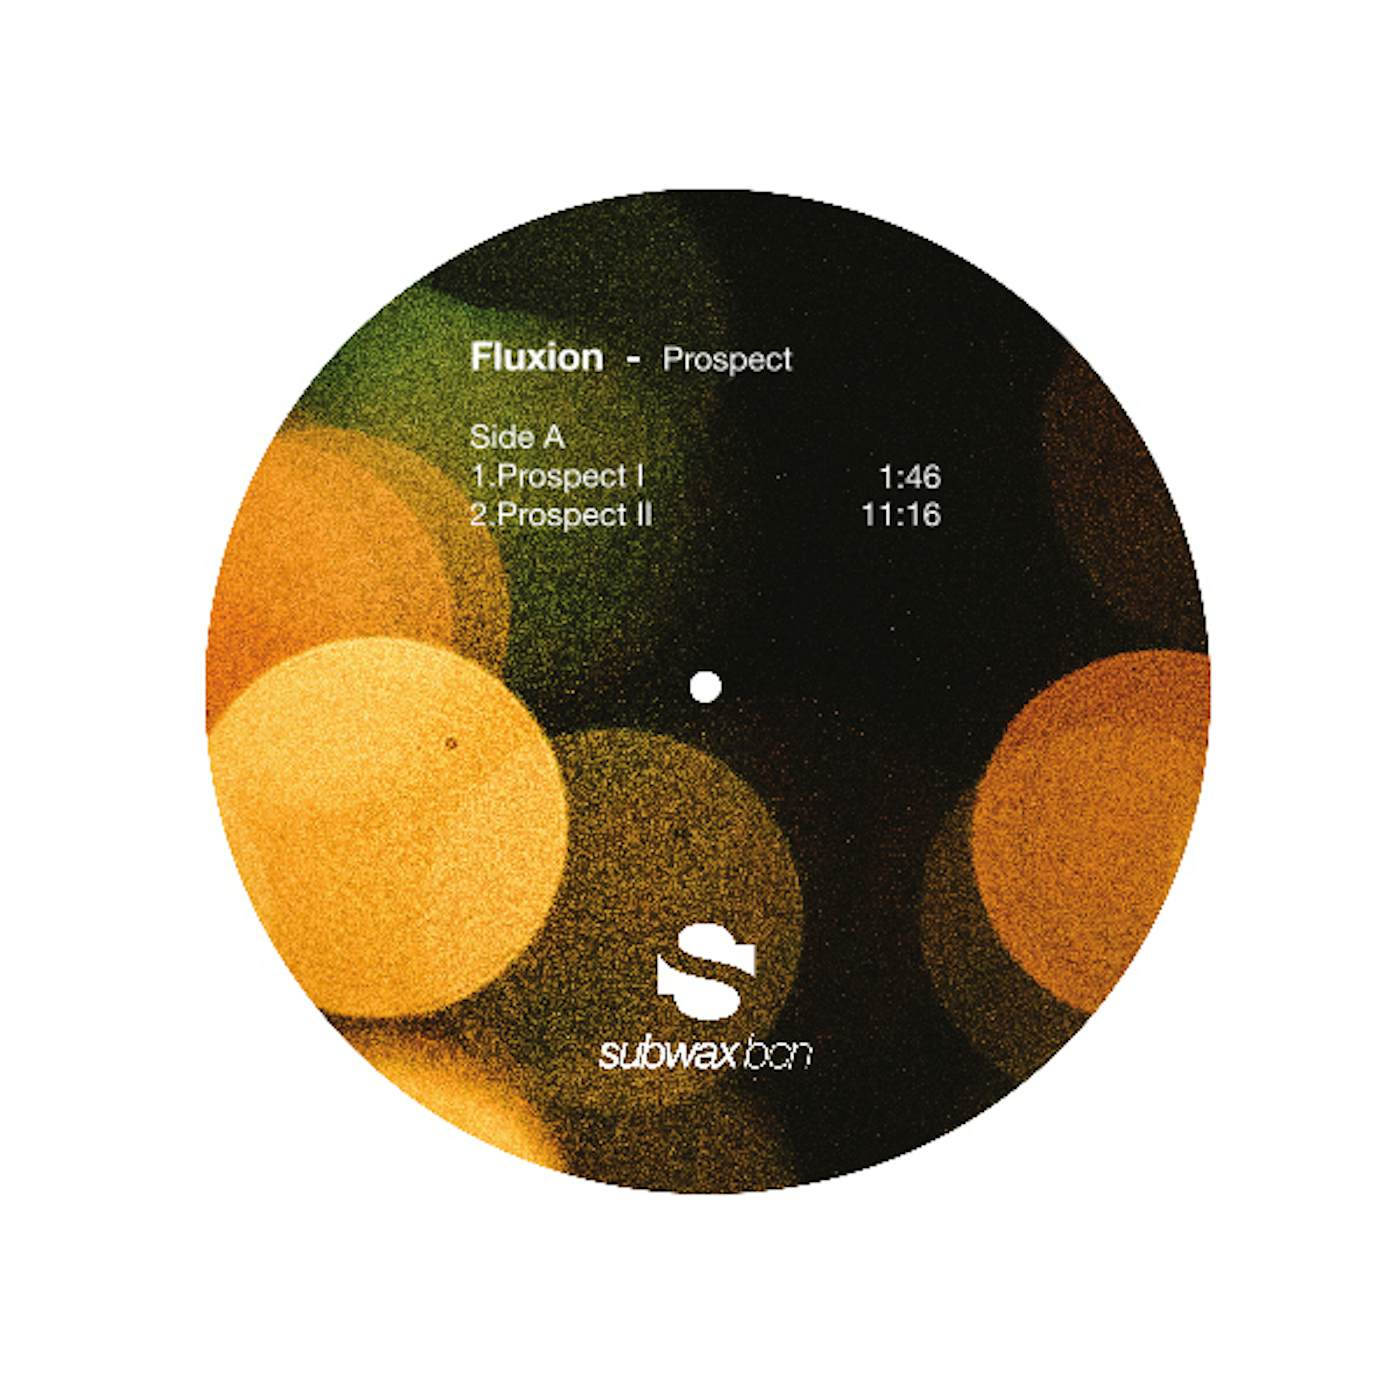 Fluxion Prospect Vinyl Record